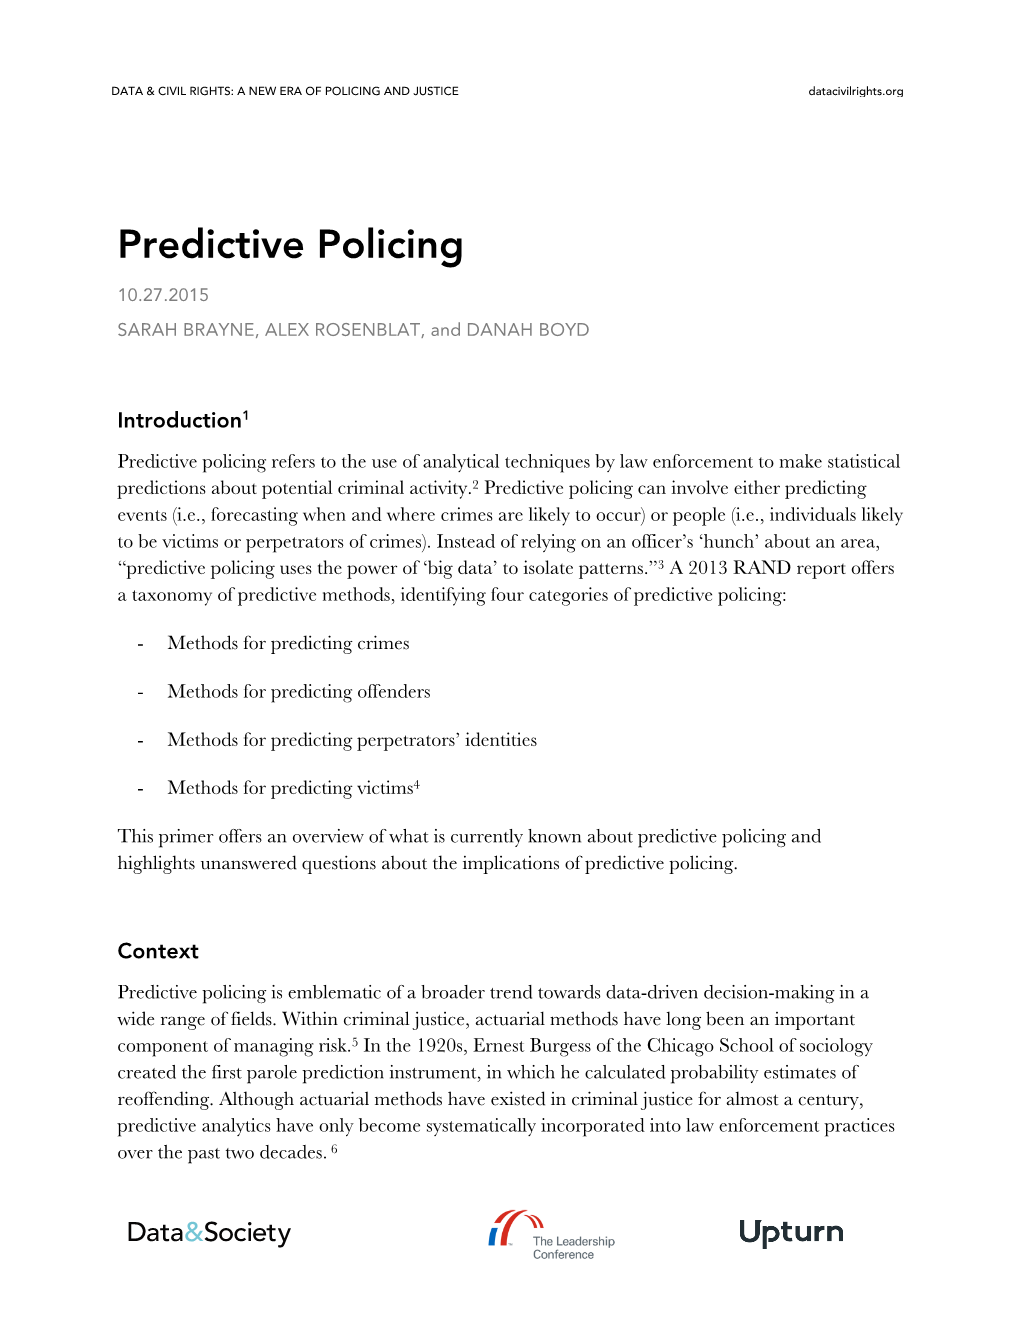 Predictive Policing and Civil Rights